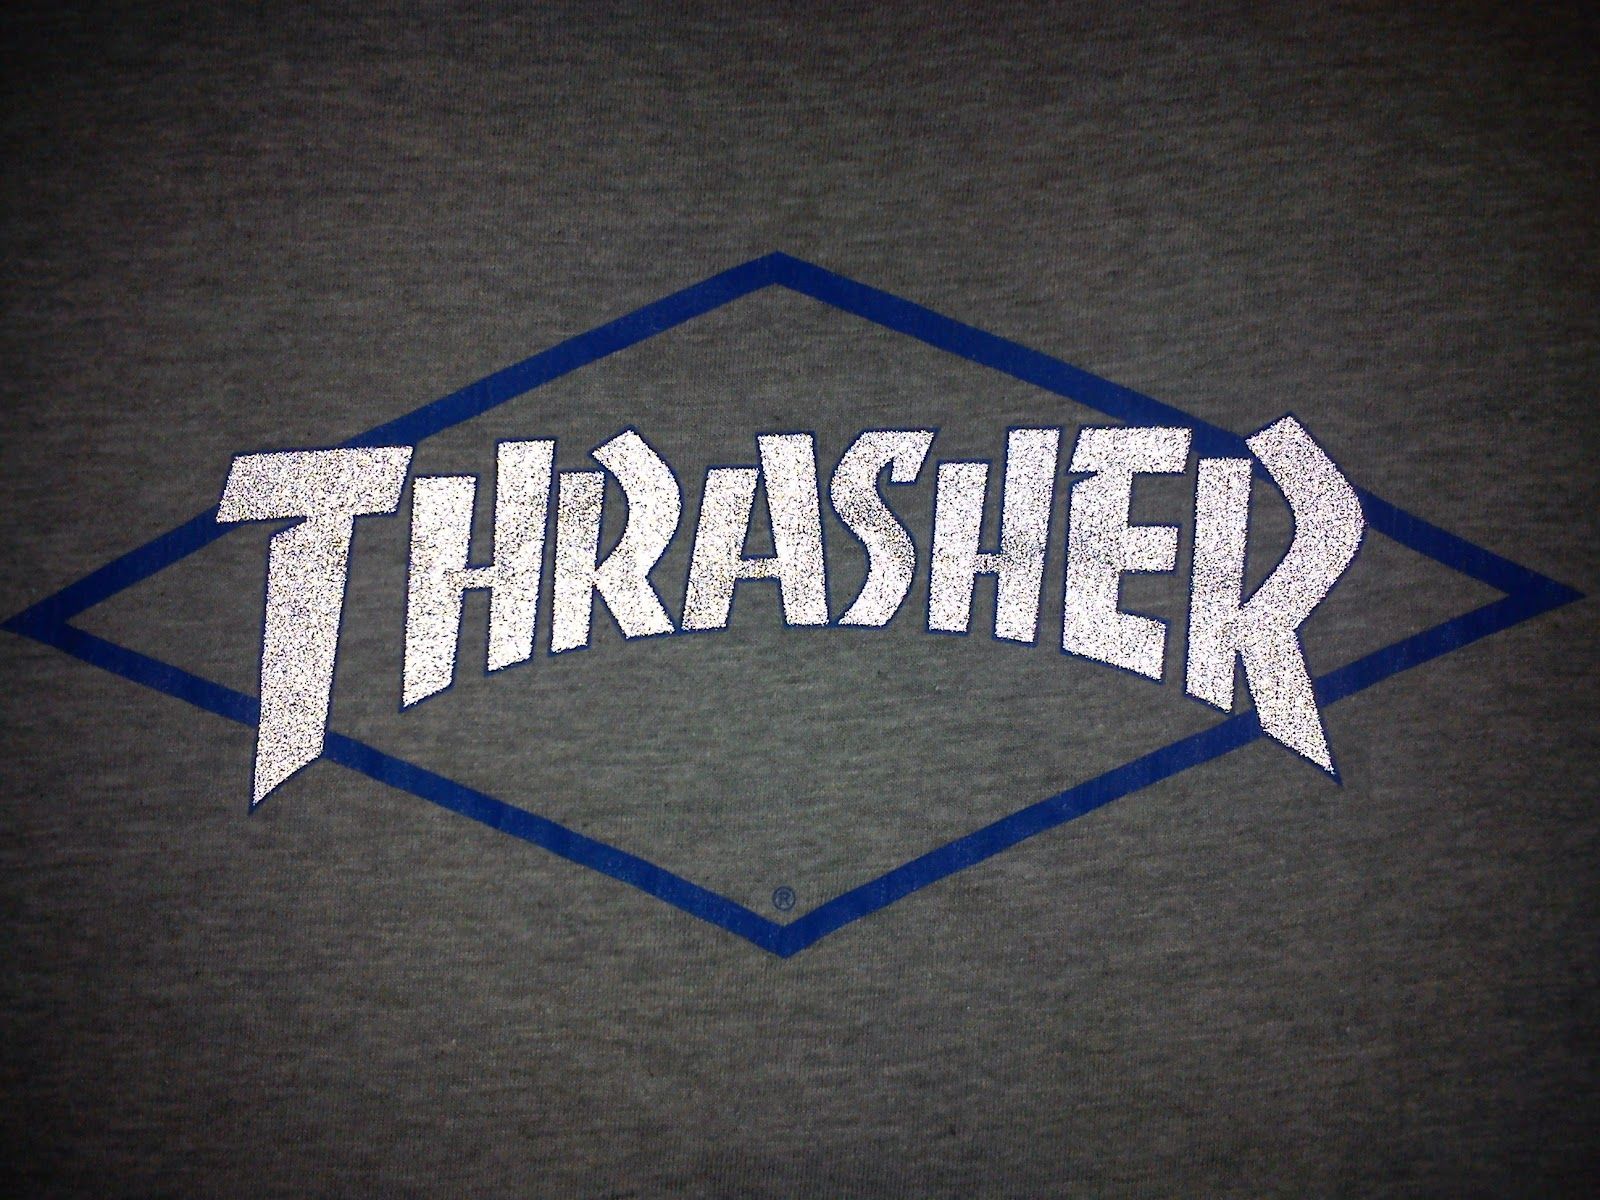 Thrasher Rose Logo Wallpapers